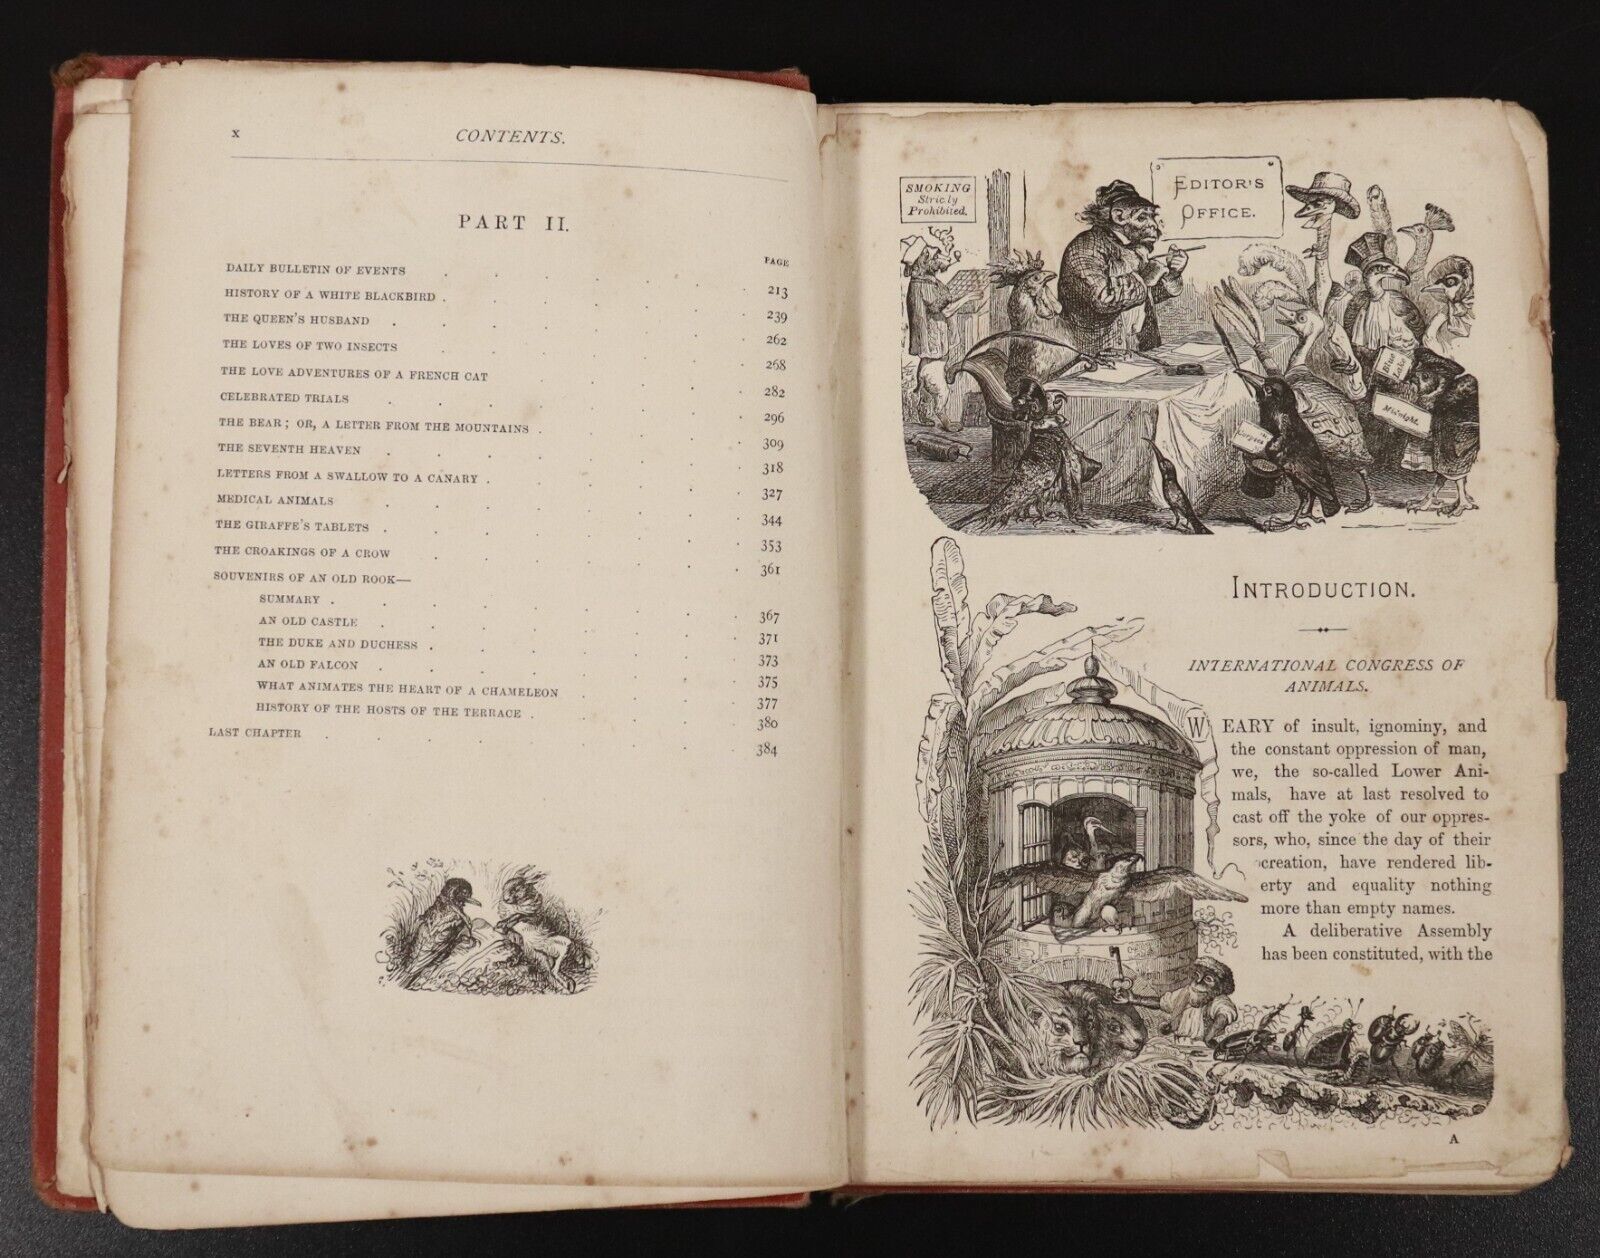 1877 Public & Private Life Of Animals Antiquarian Fables Literature Book Scarce